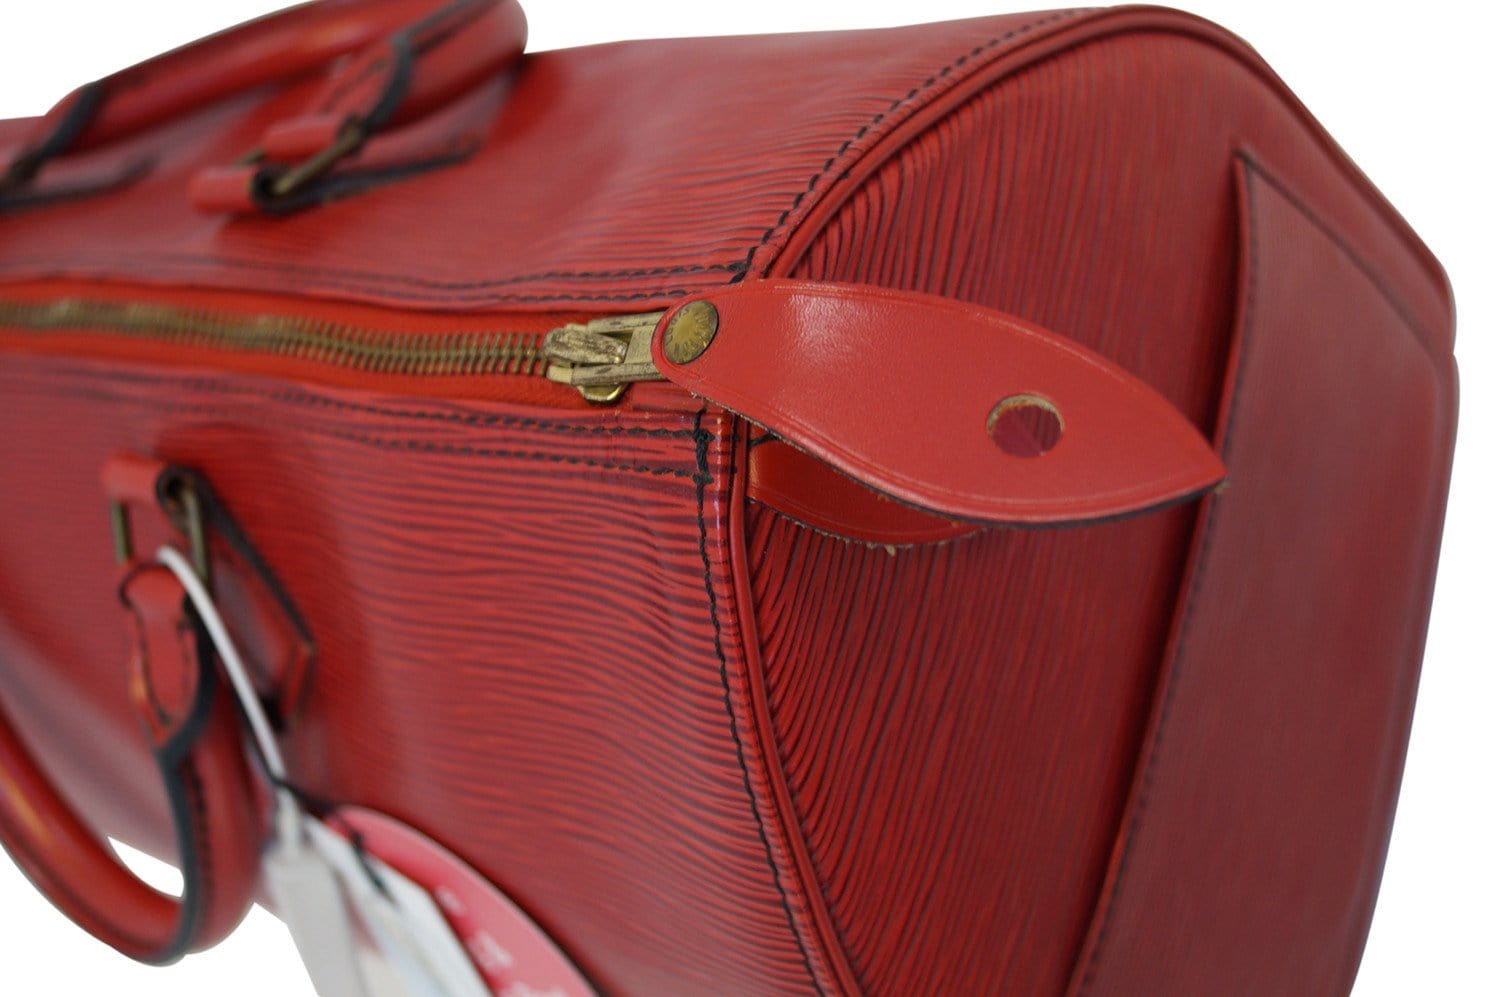 Louis+Vuitton+Speedy+Satchel+Medium+Red+Leather for sale online